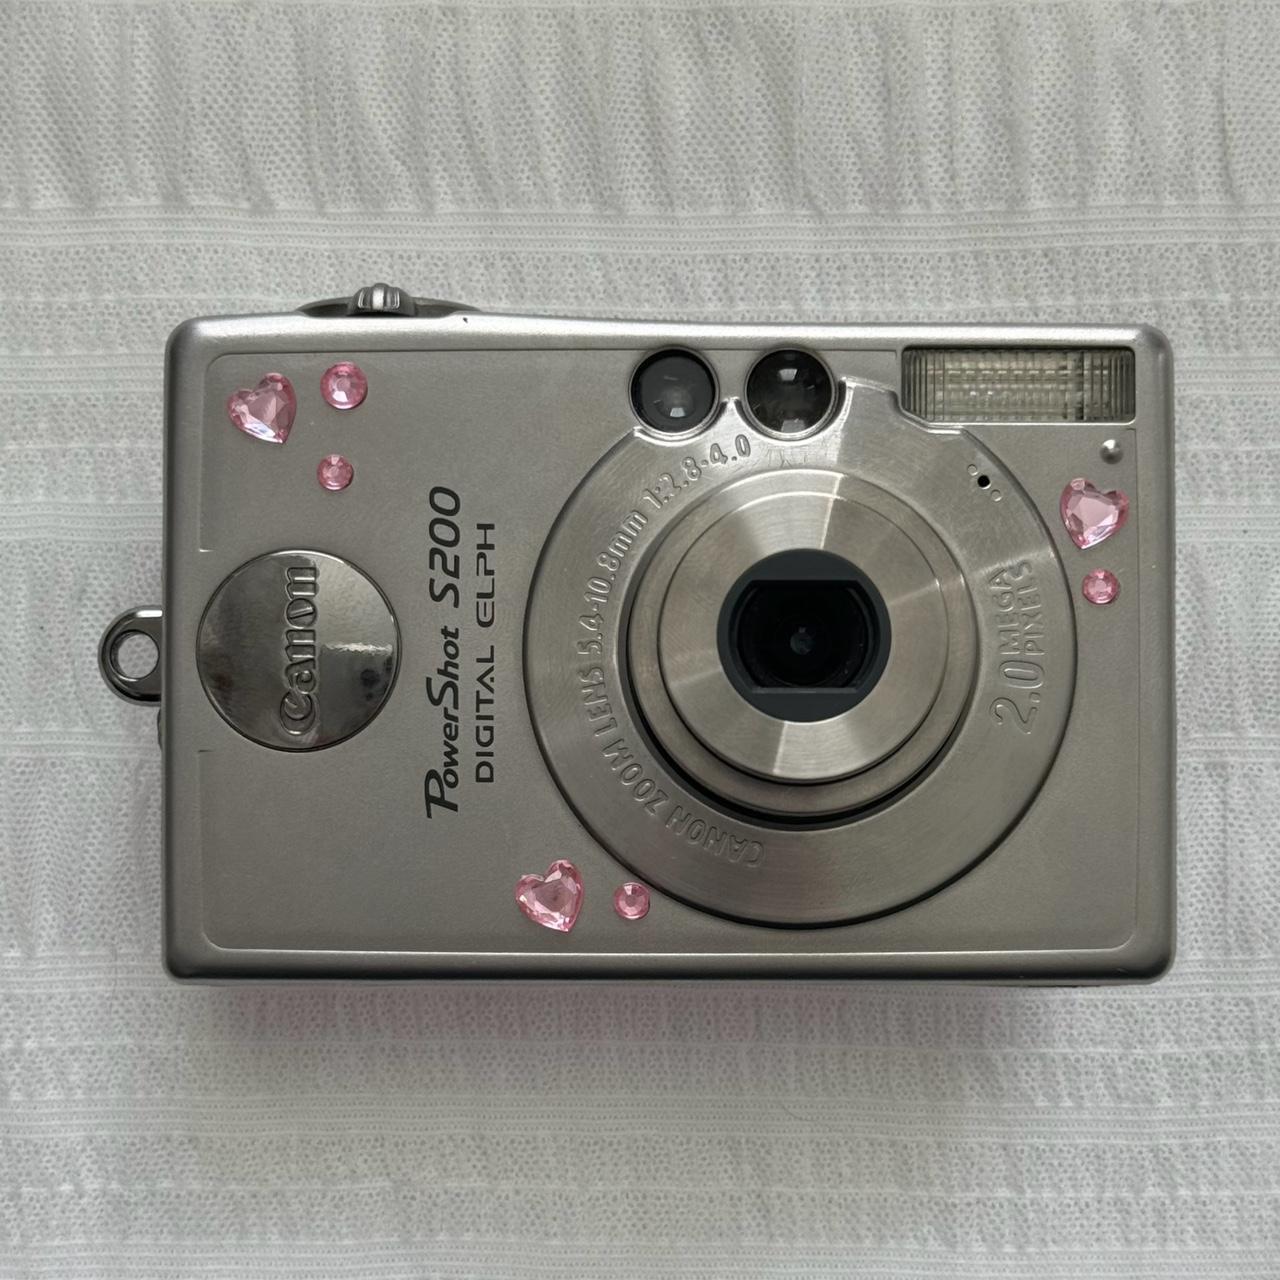 Canon PowerShot S200 - PowerShot and IXUS digital compact cameras